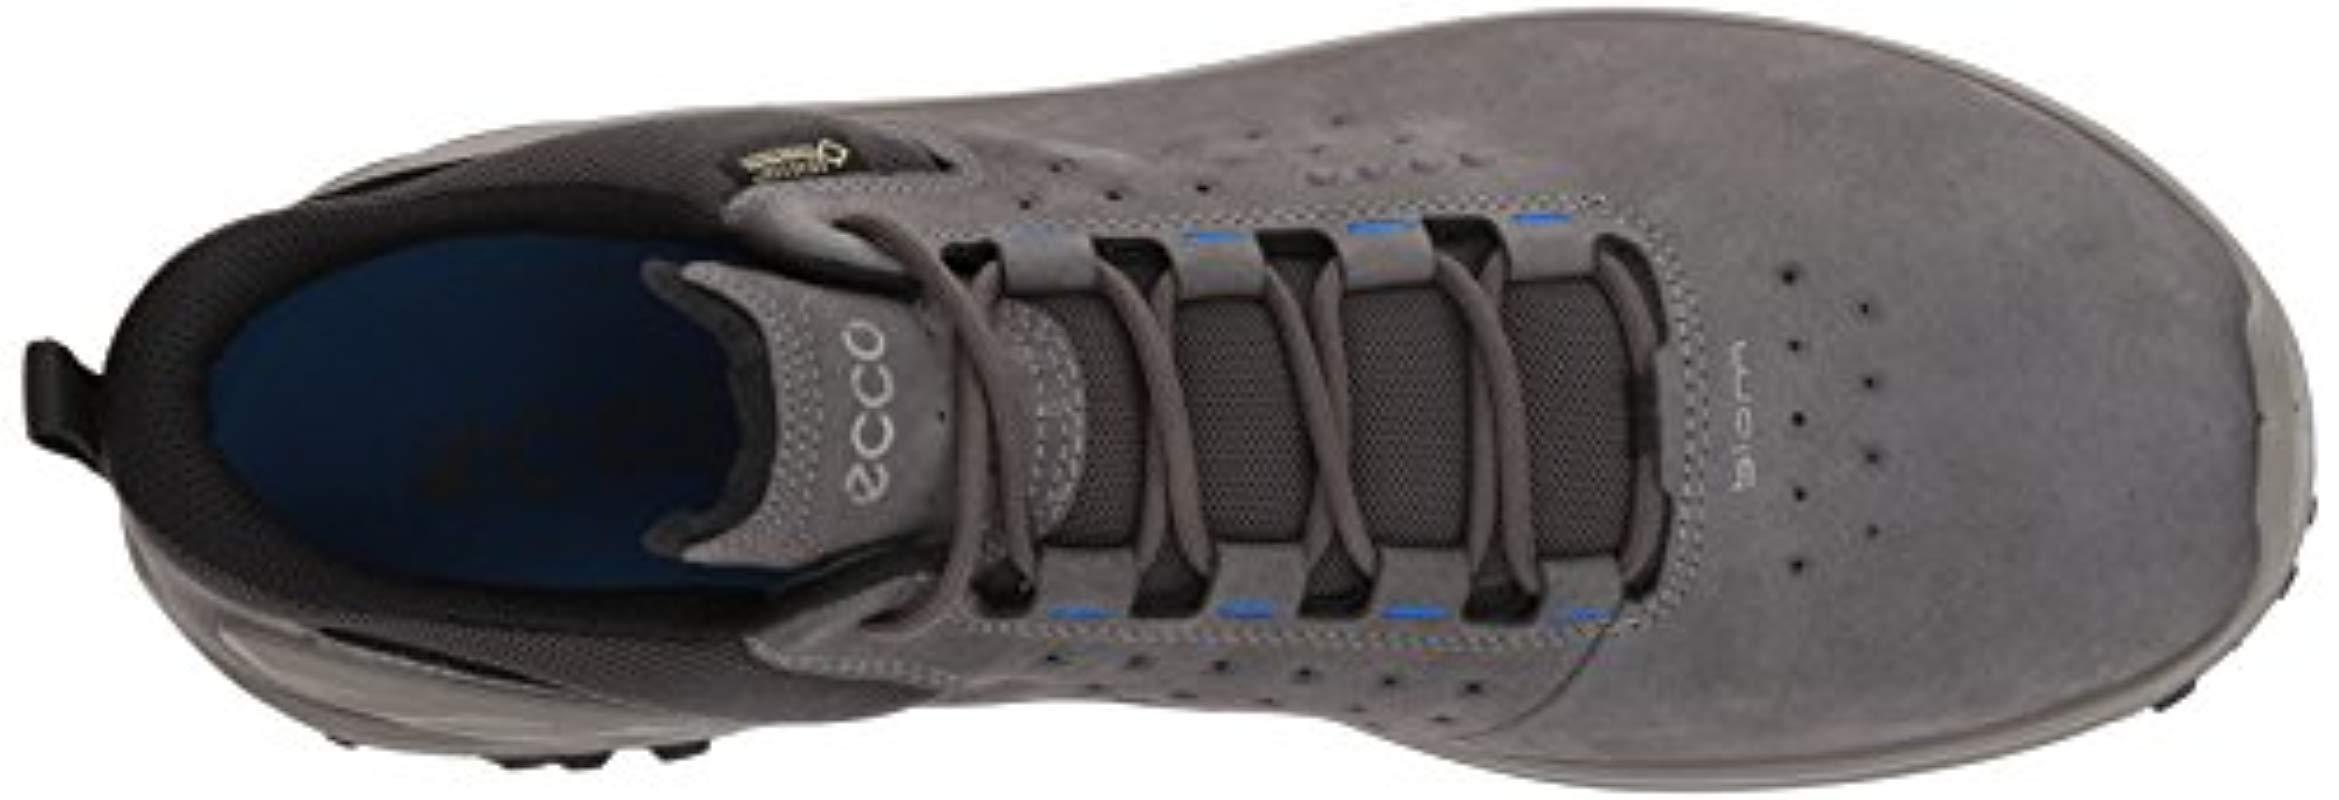 Ecco Biom Venture Leather Tie Shoe for Men Lyst